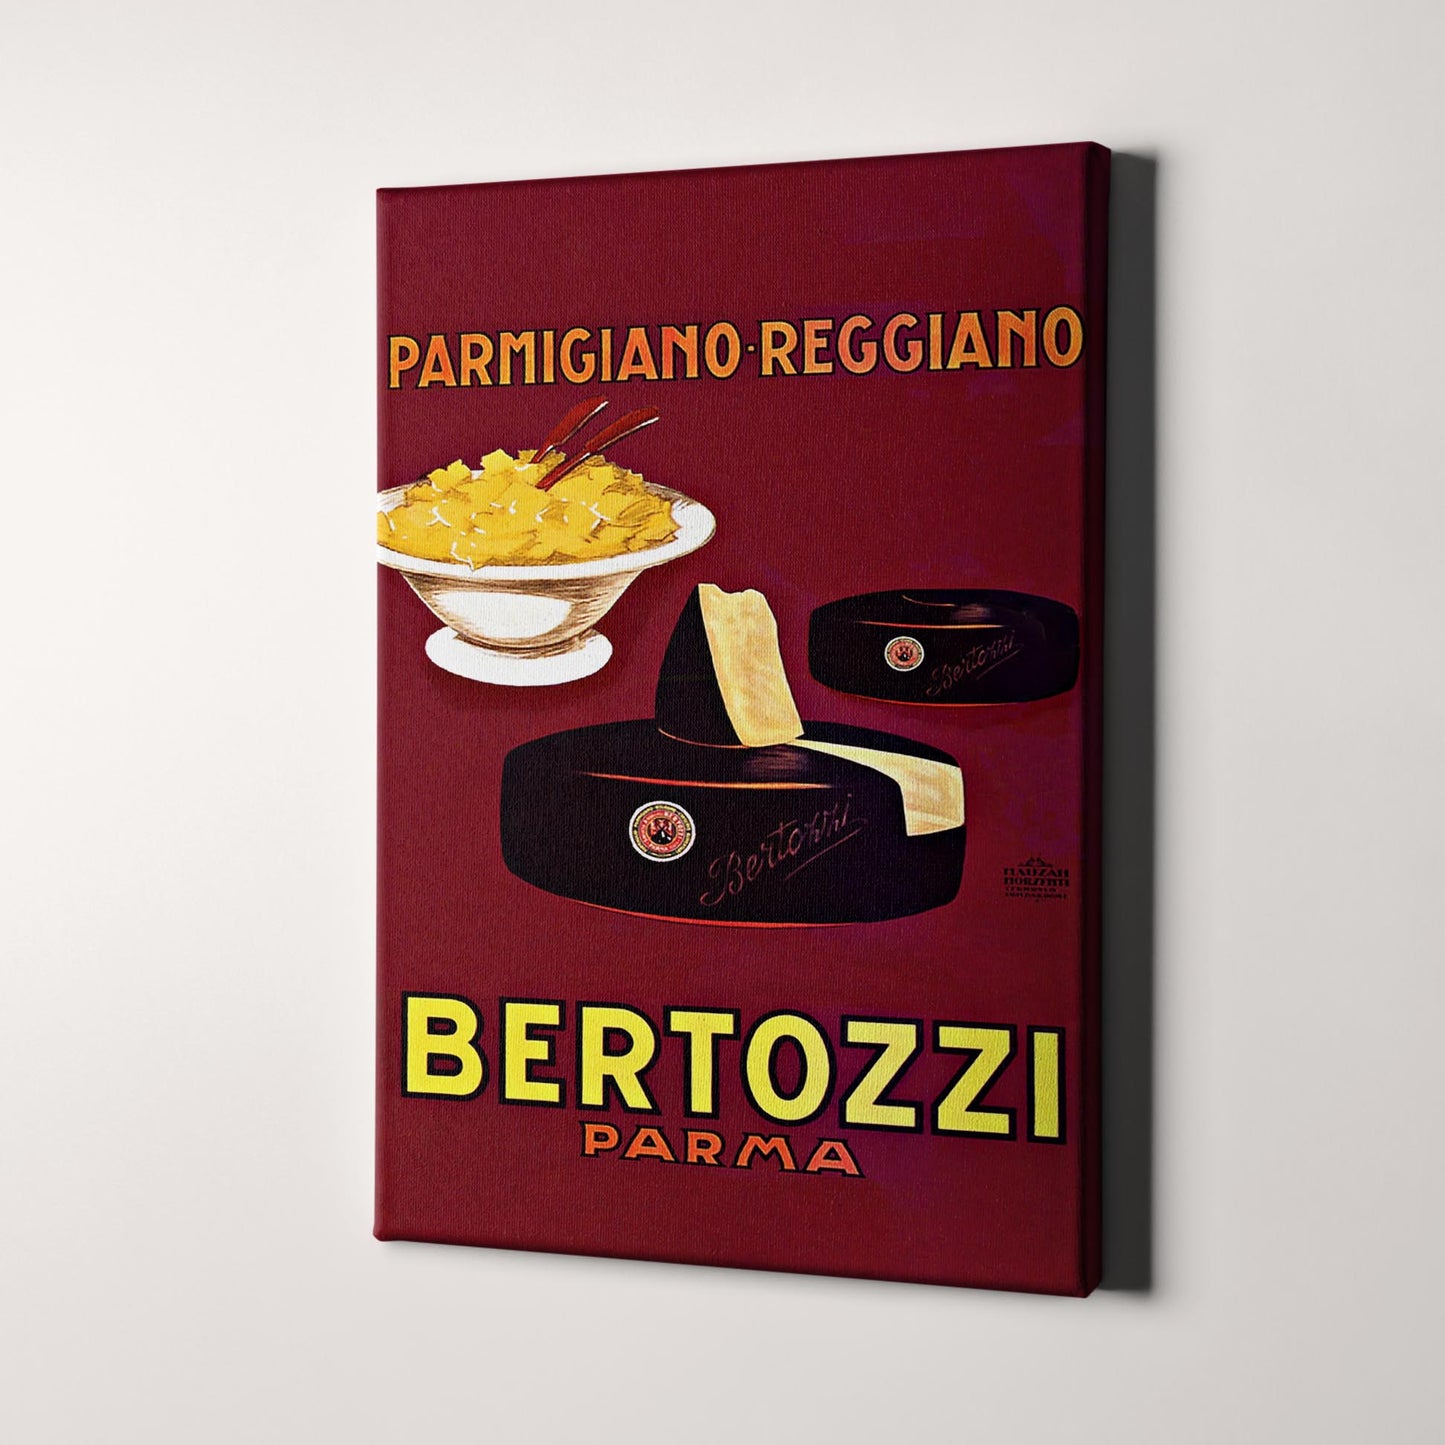 Bertozzi Parma - Parmigiano Reggiano